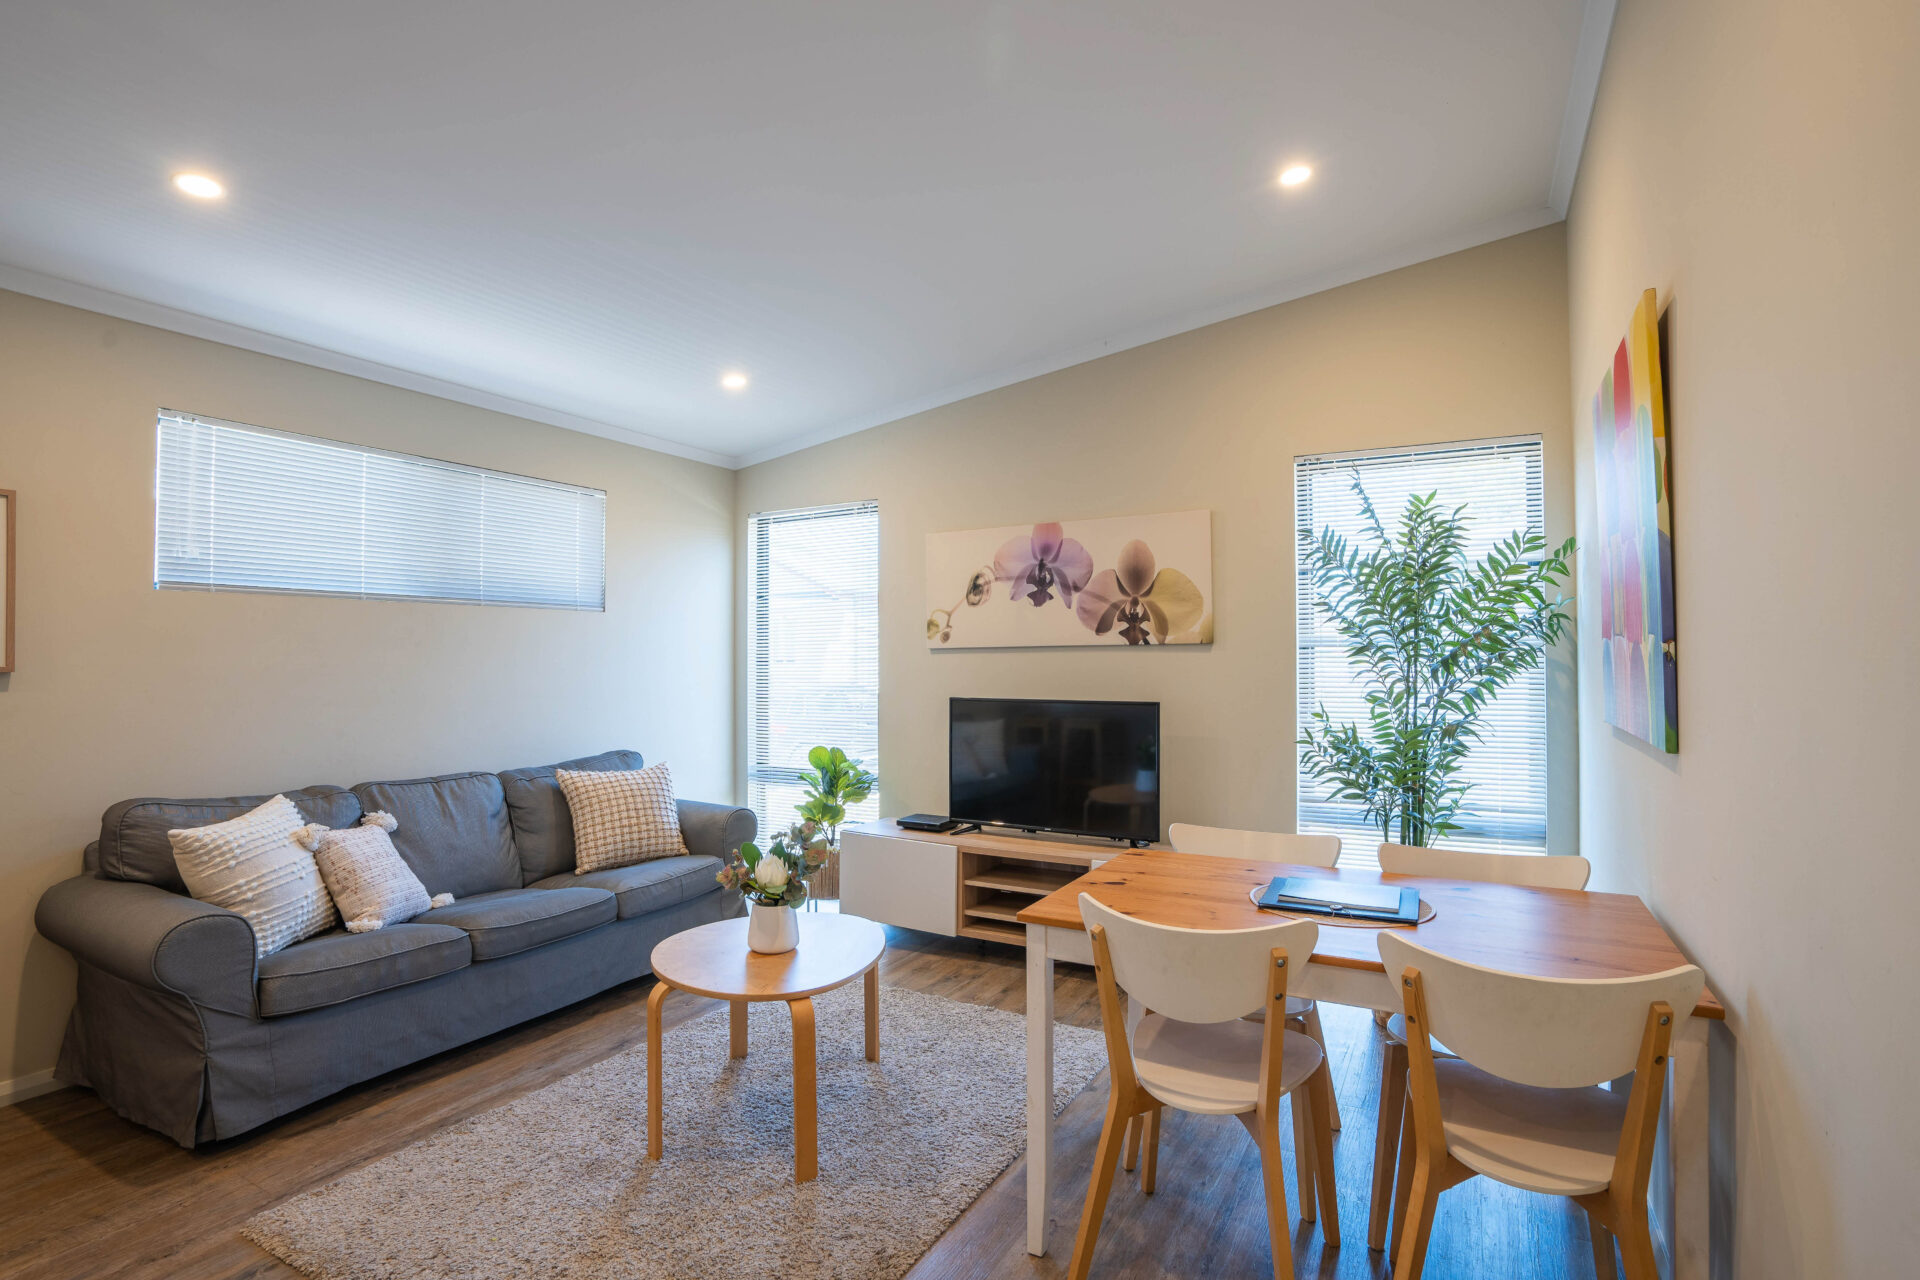 Living room of 2 bedroom holiday home | Tasman Holiday Parks Serpentine Falls